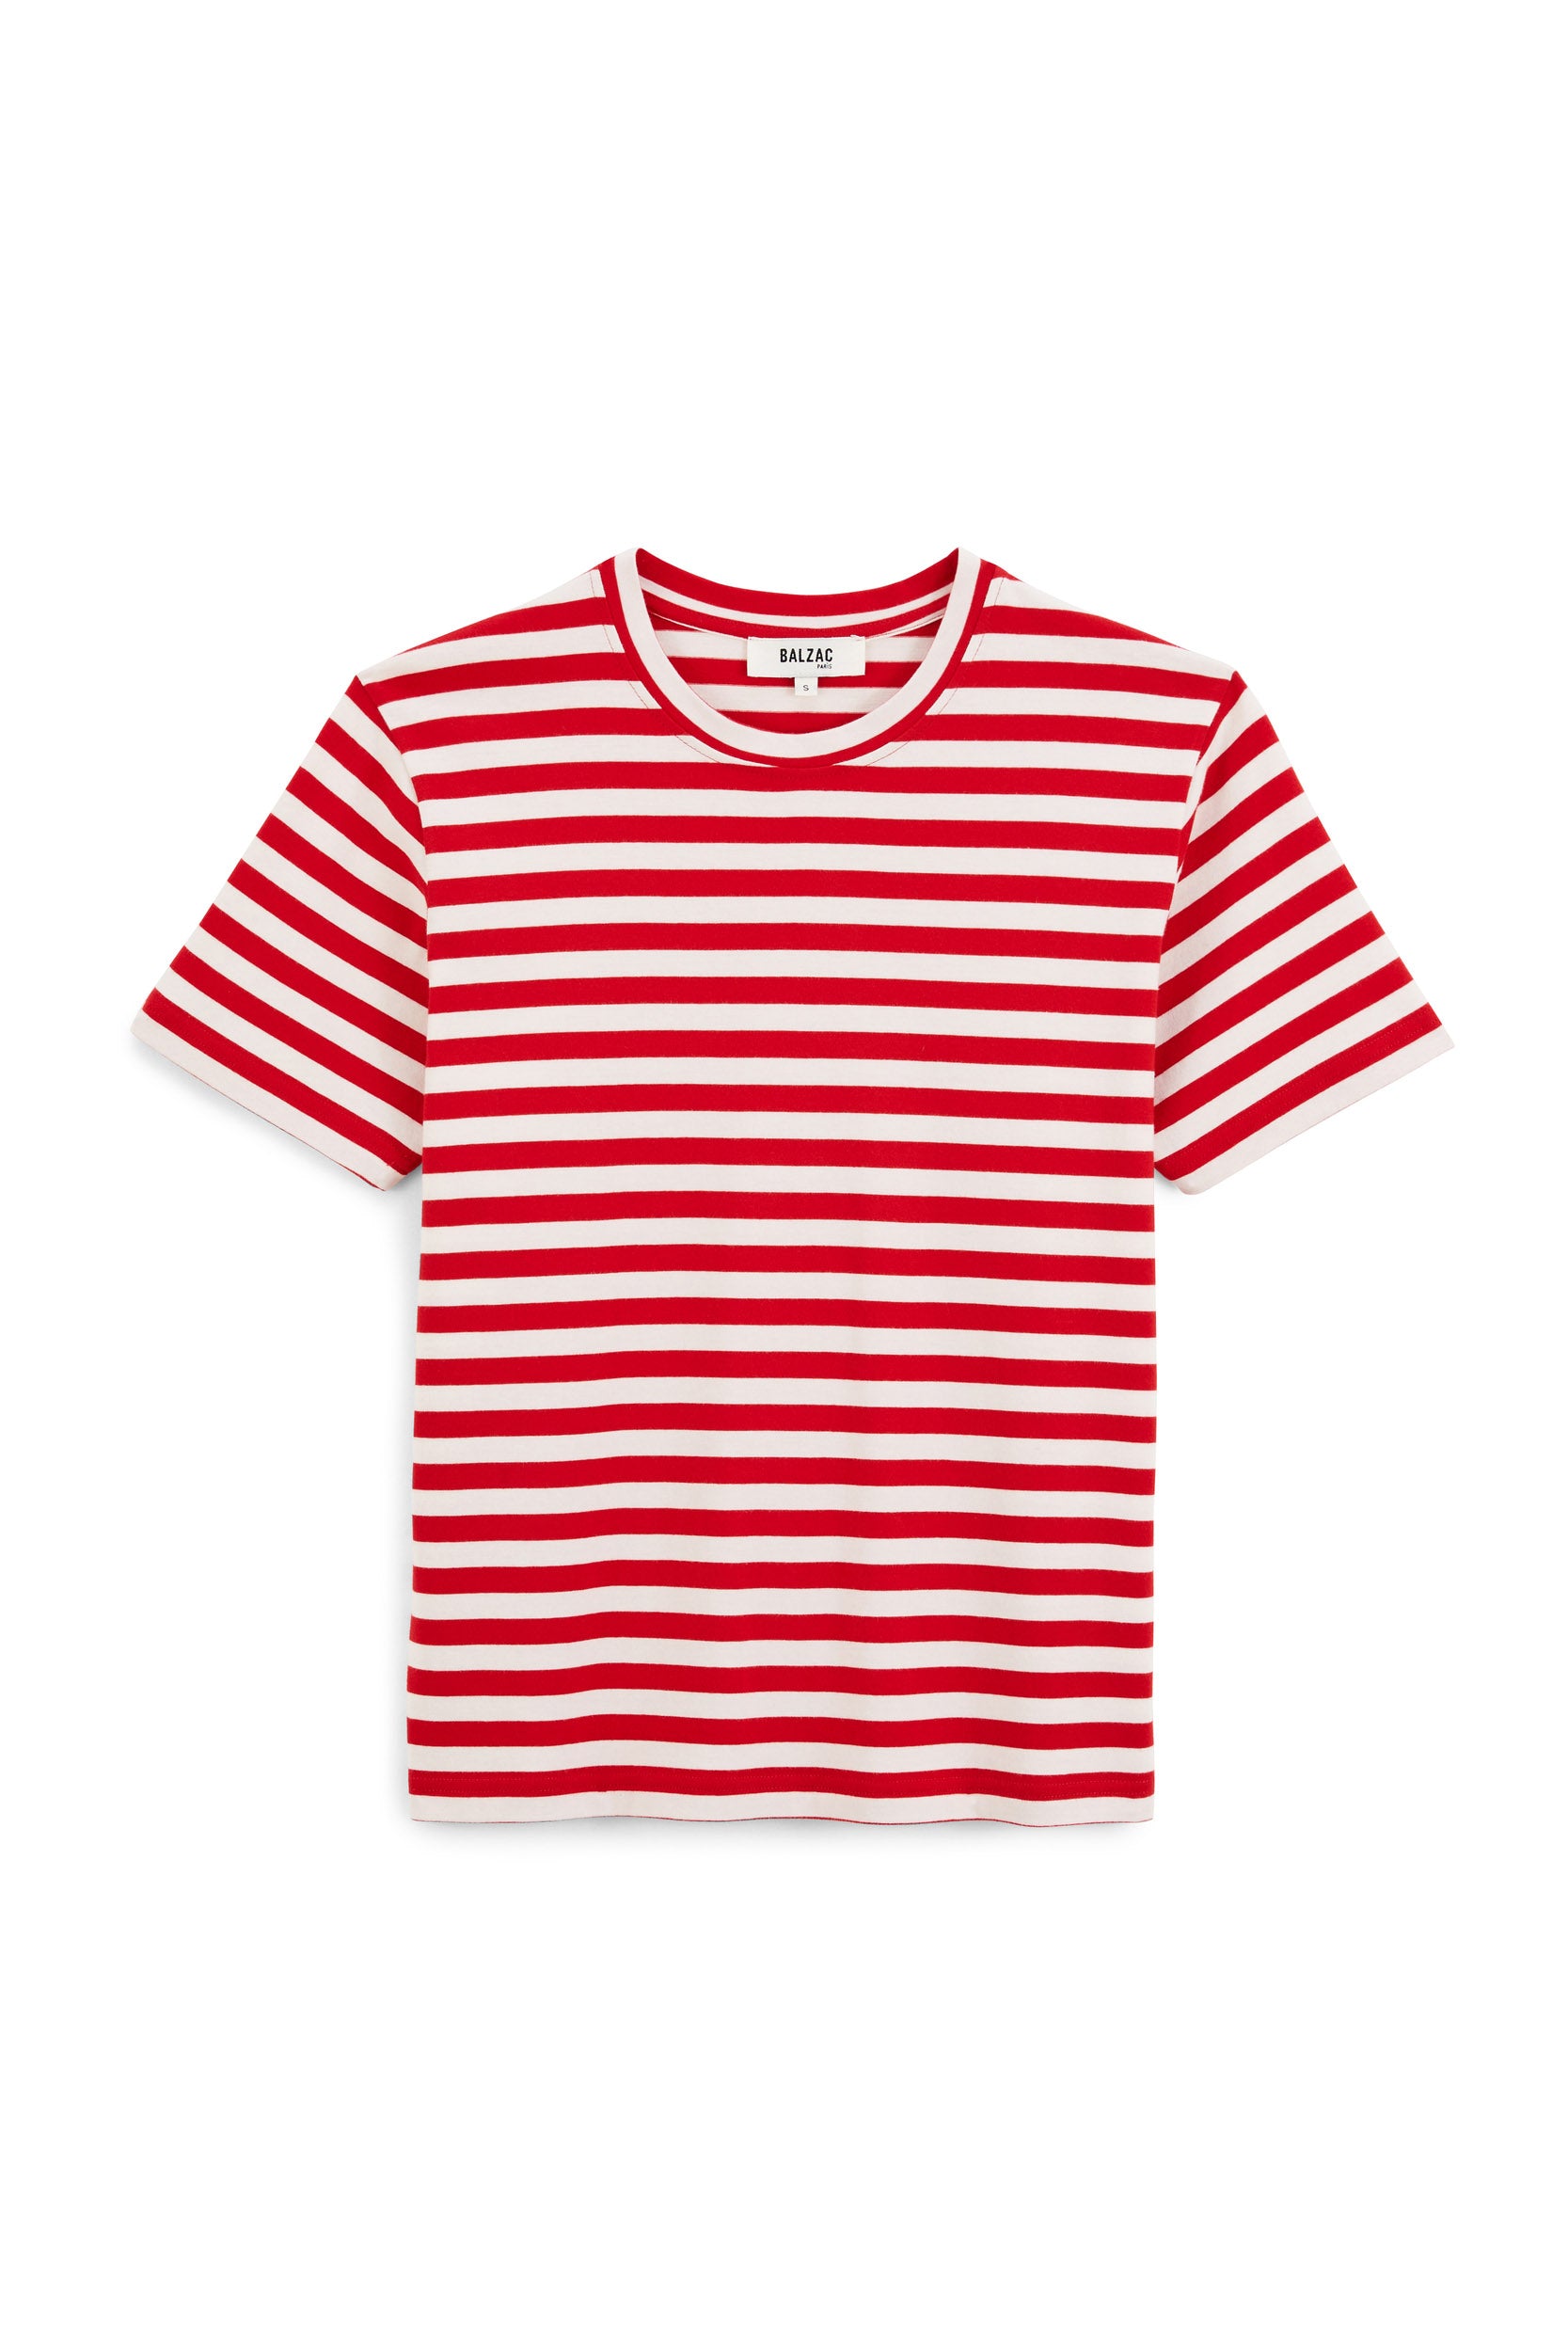 Tee-shirt Bree rayures rouge et blanc